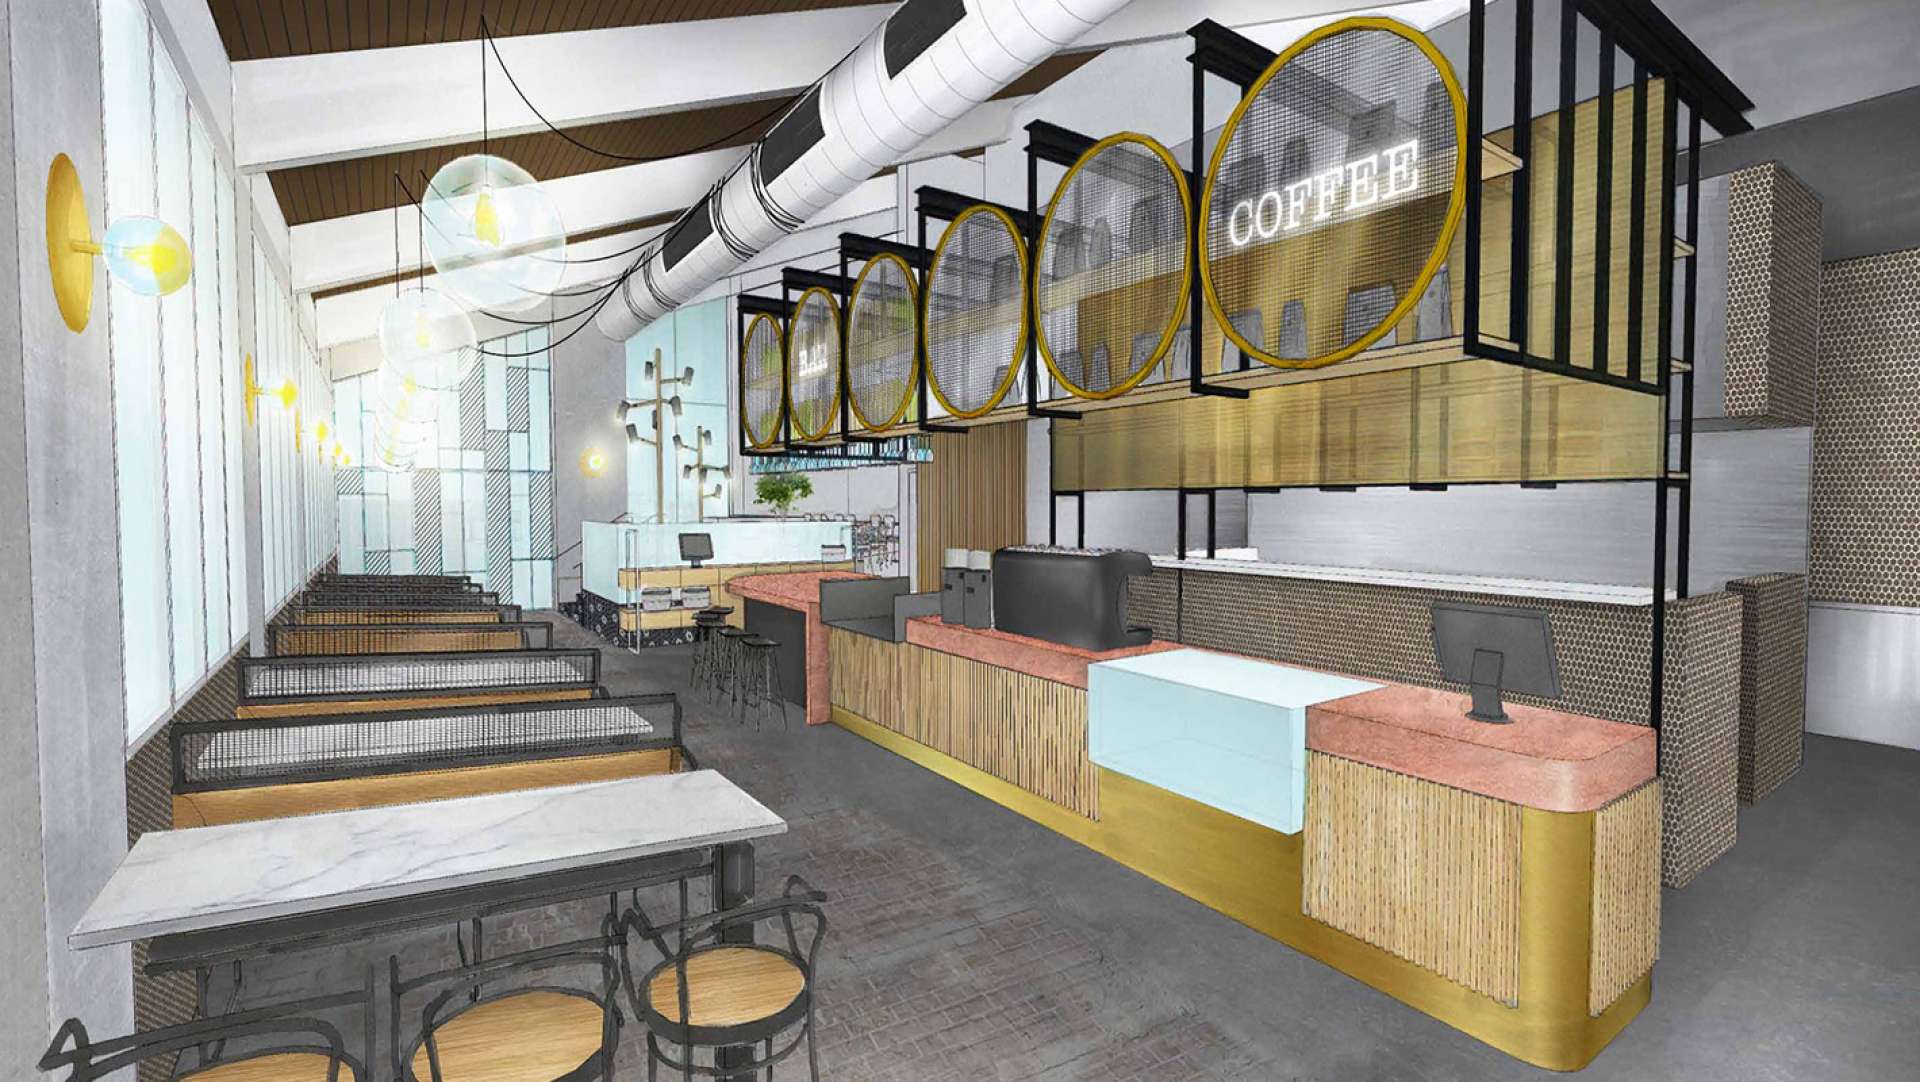 Working Progress: Riddik Cafe Restaurant Bar is Under Construction